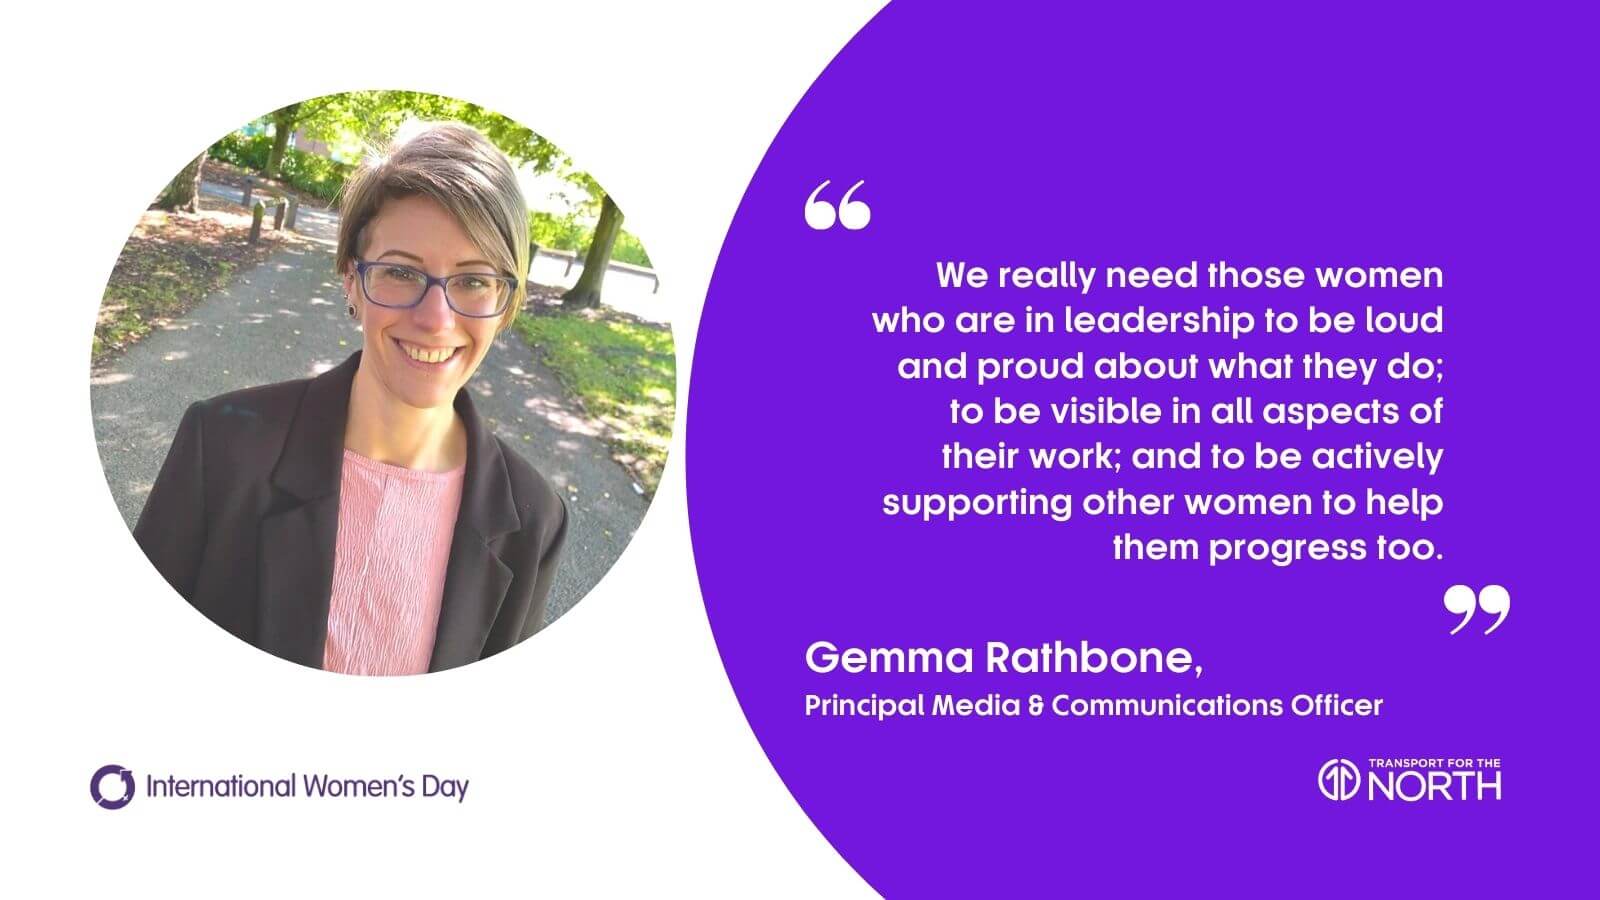 Gemma Rathbone (she/her), Principal Media & Communications Officer on International Women’s Day 2021